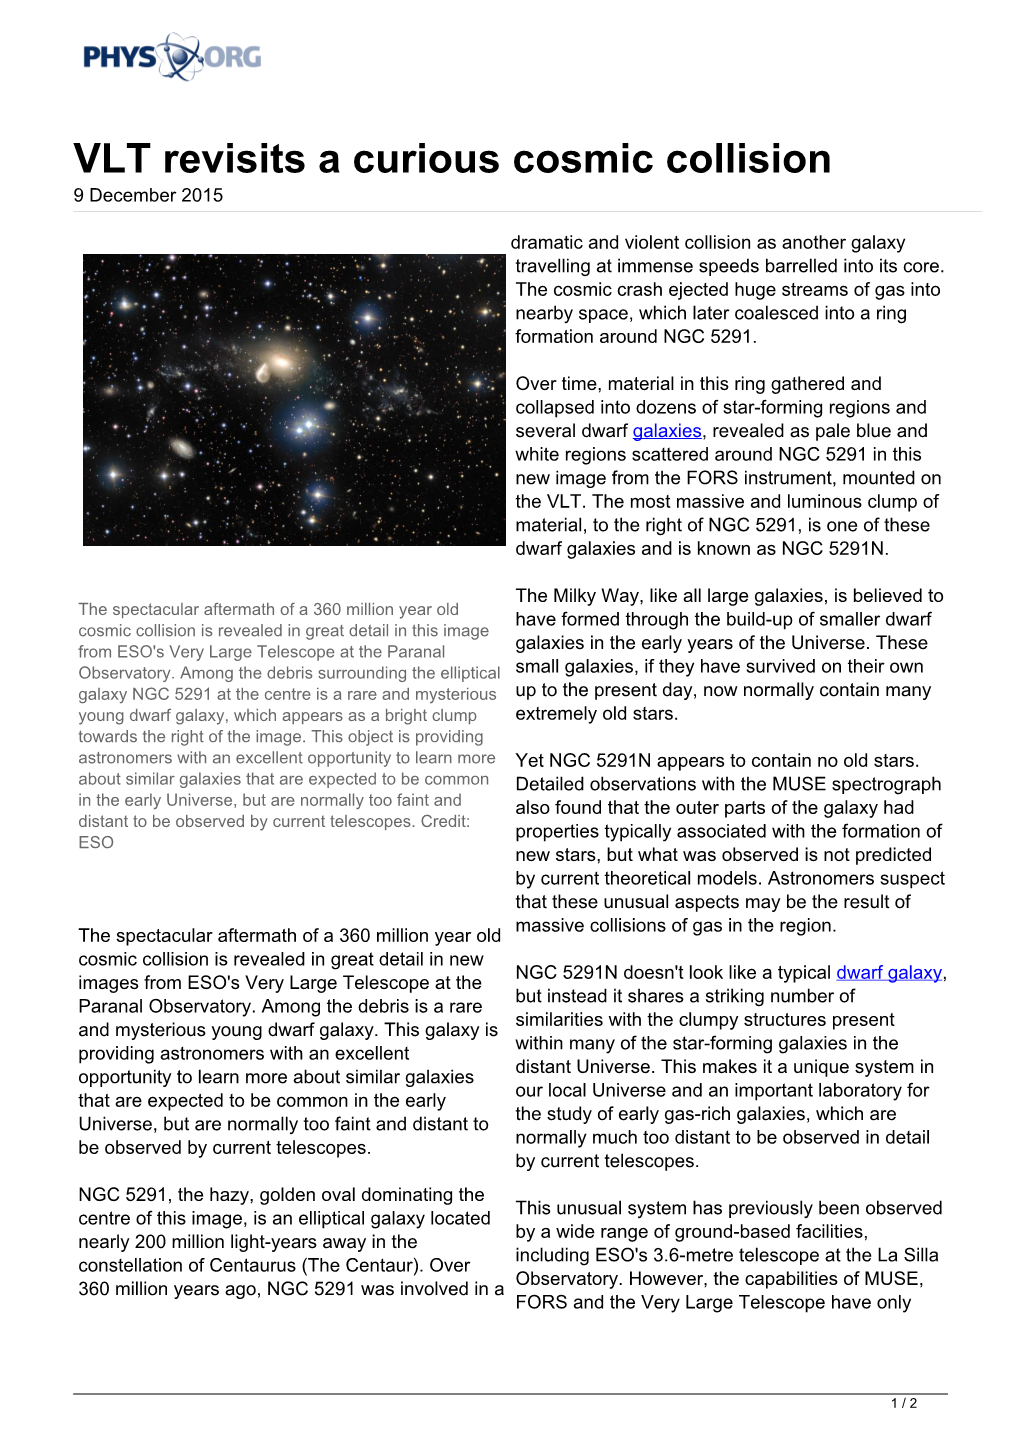 VLT Revisits a Curious Cosmic Collision 9 December 2015